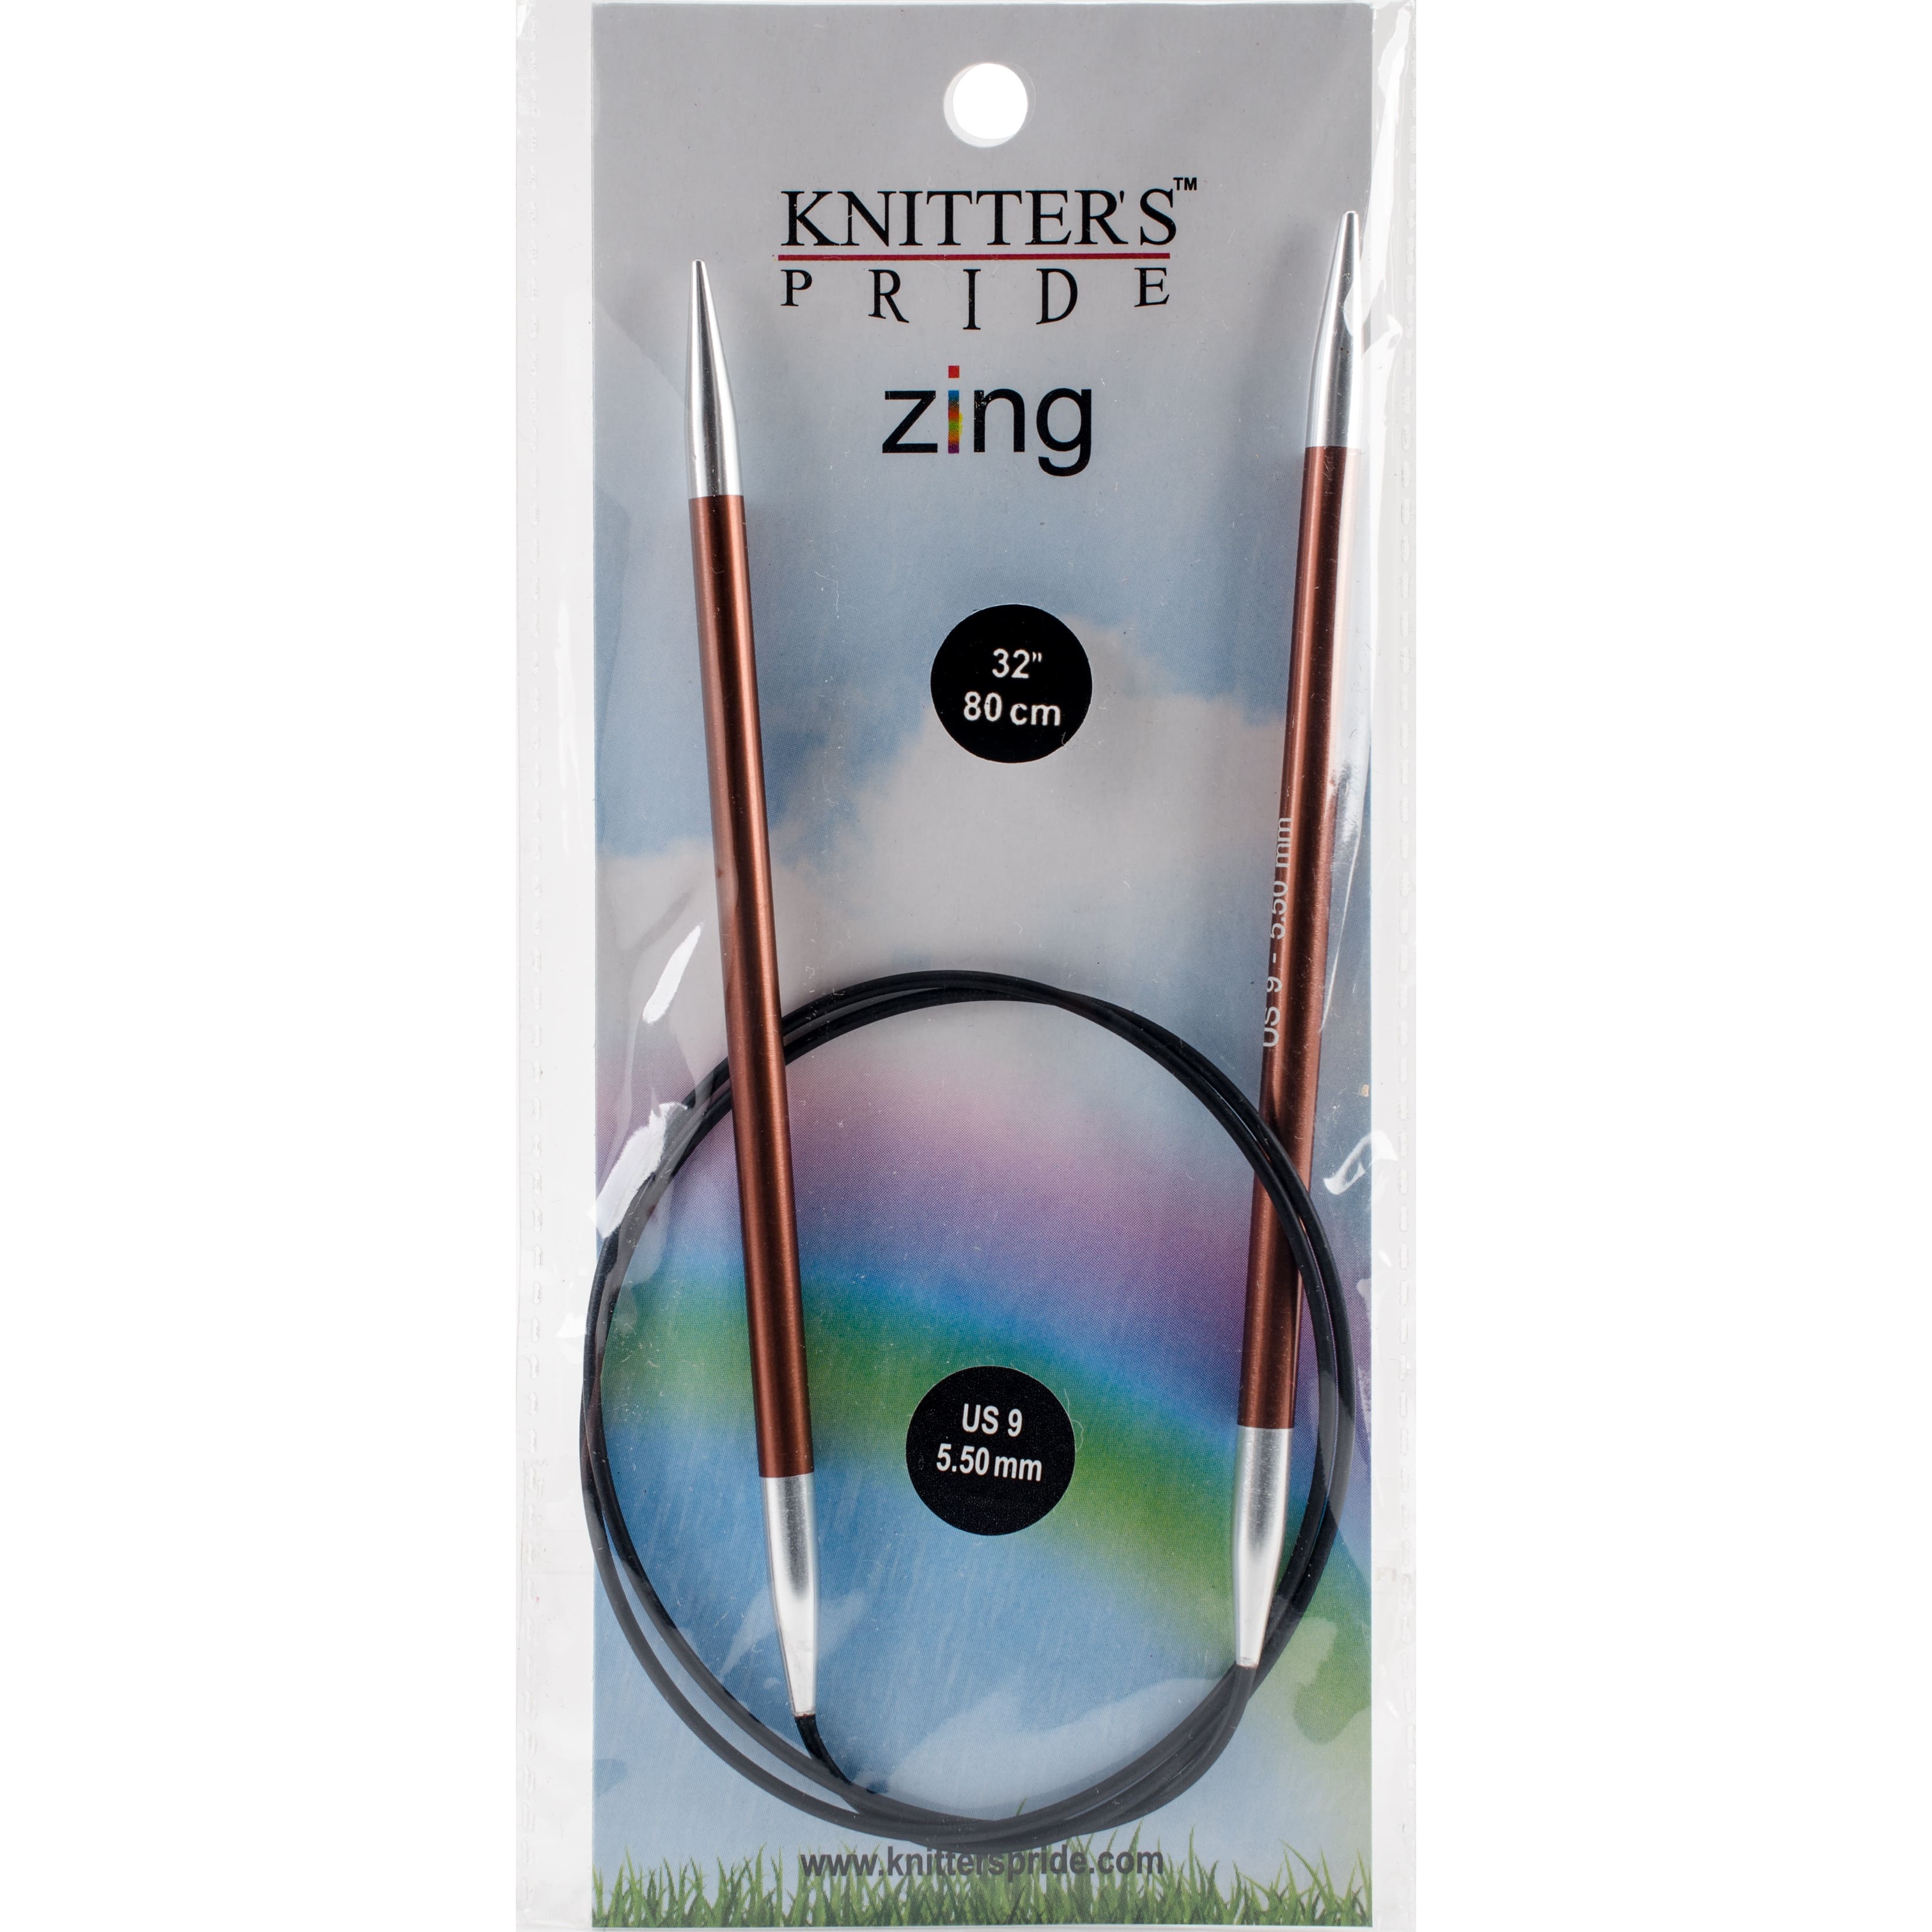 Knitter's Pride 9 Zing Fixed Circular